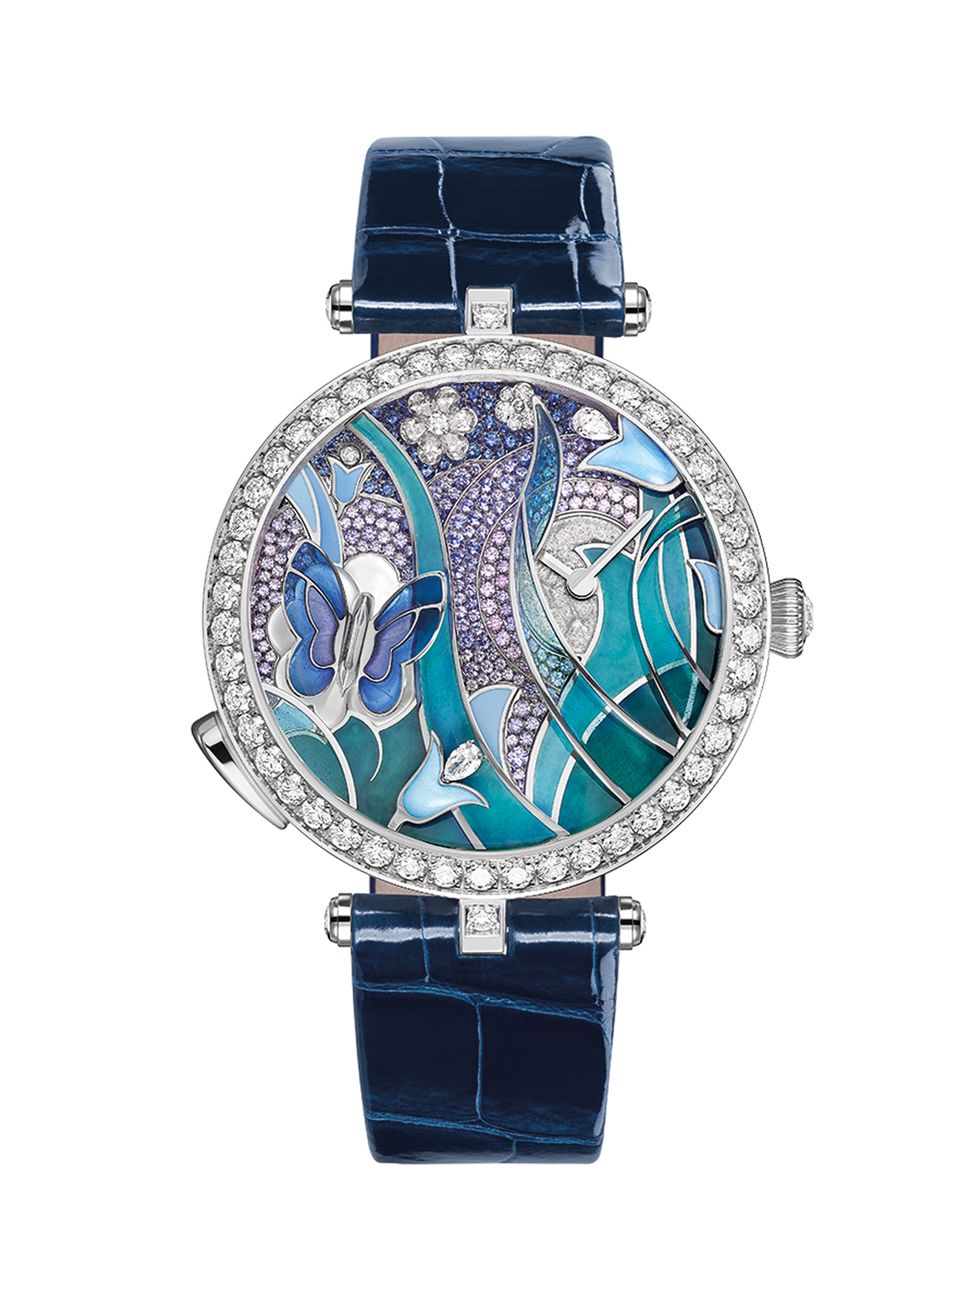 Analog watch, Watch, Fashion accessory, Turquoise, Aqua, Jewellery, Strap, Watch accessory, Silver, Turquoise, 